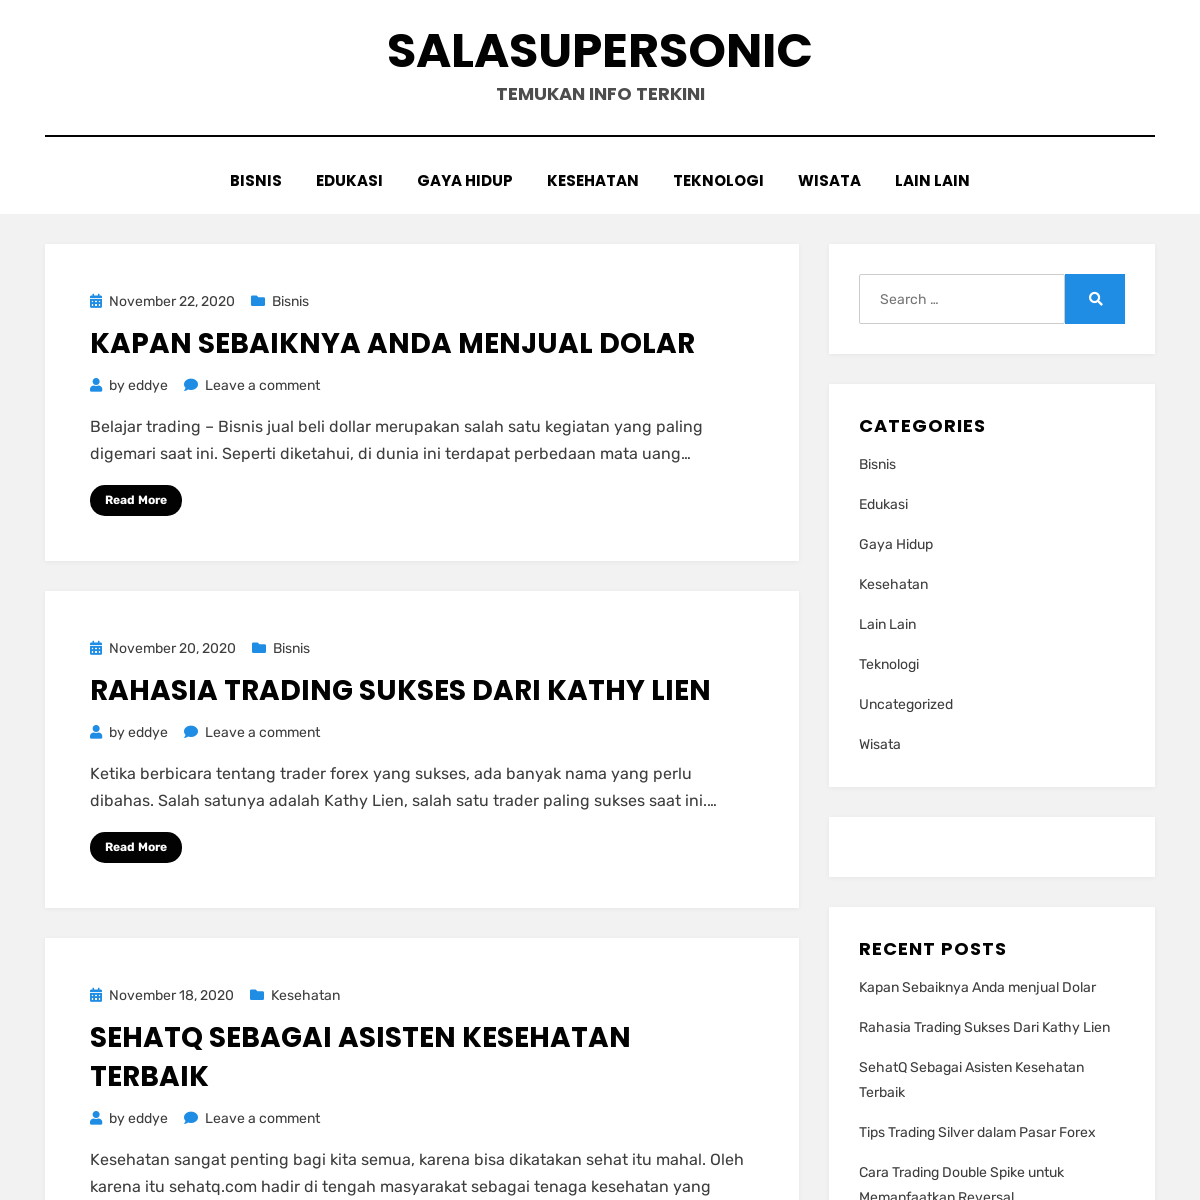 A complete backup of salasupersonic.com